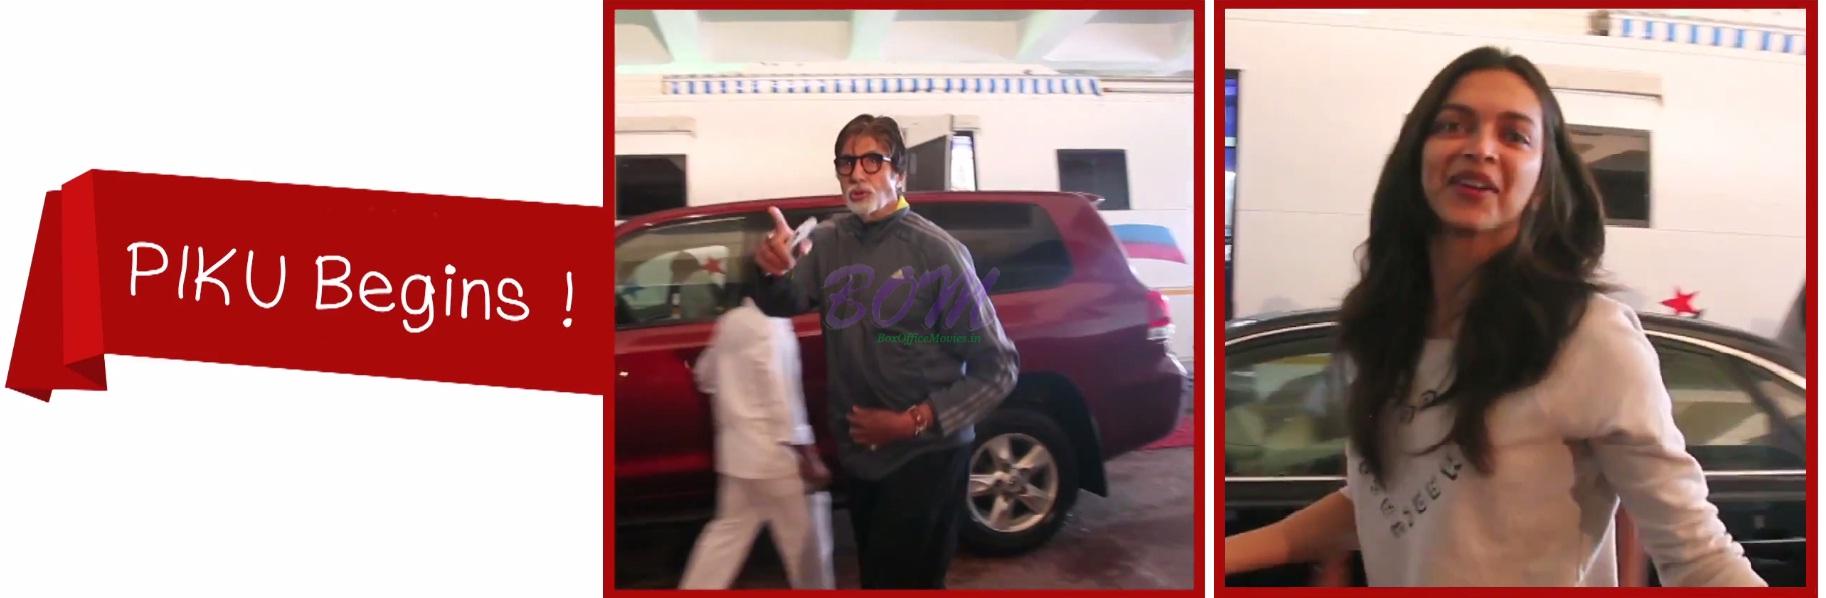 Amitabh Bachchan and Deepika Padukone on set of PIKU movie